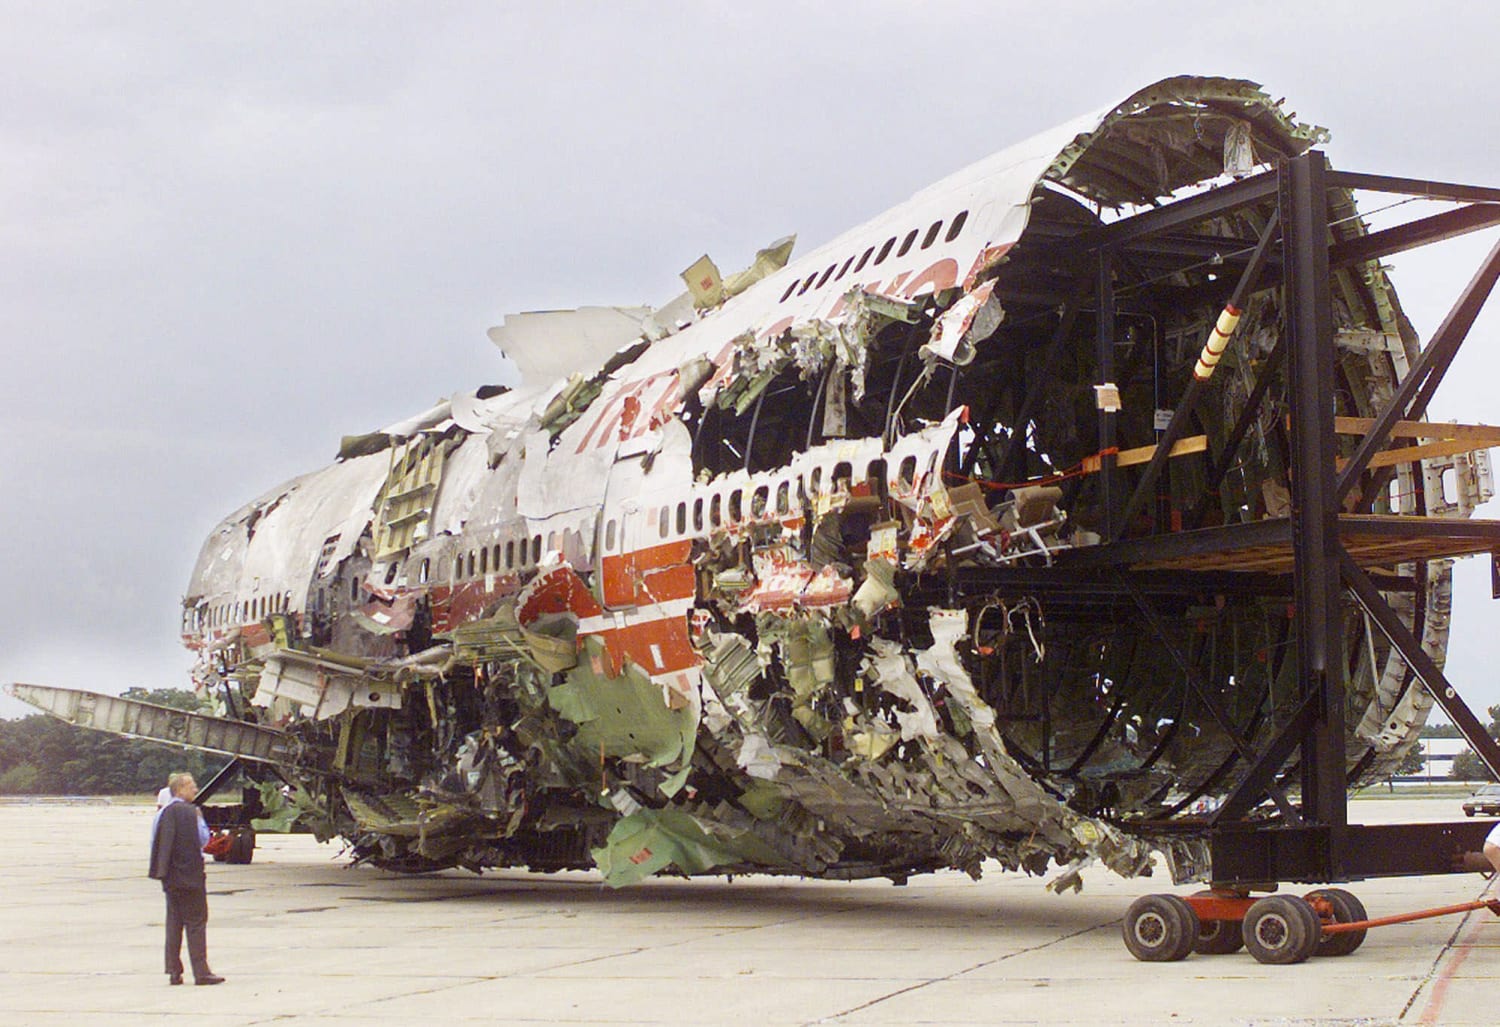 TWA Flight 800 crash: Inside look at plane's wreckage